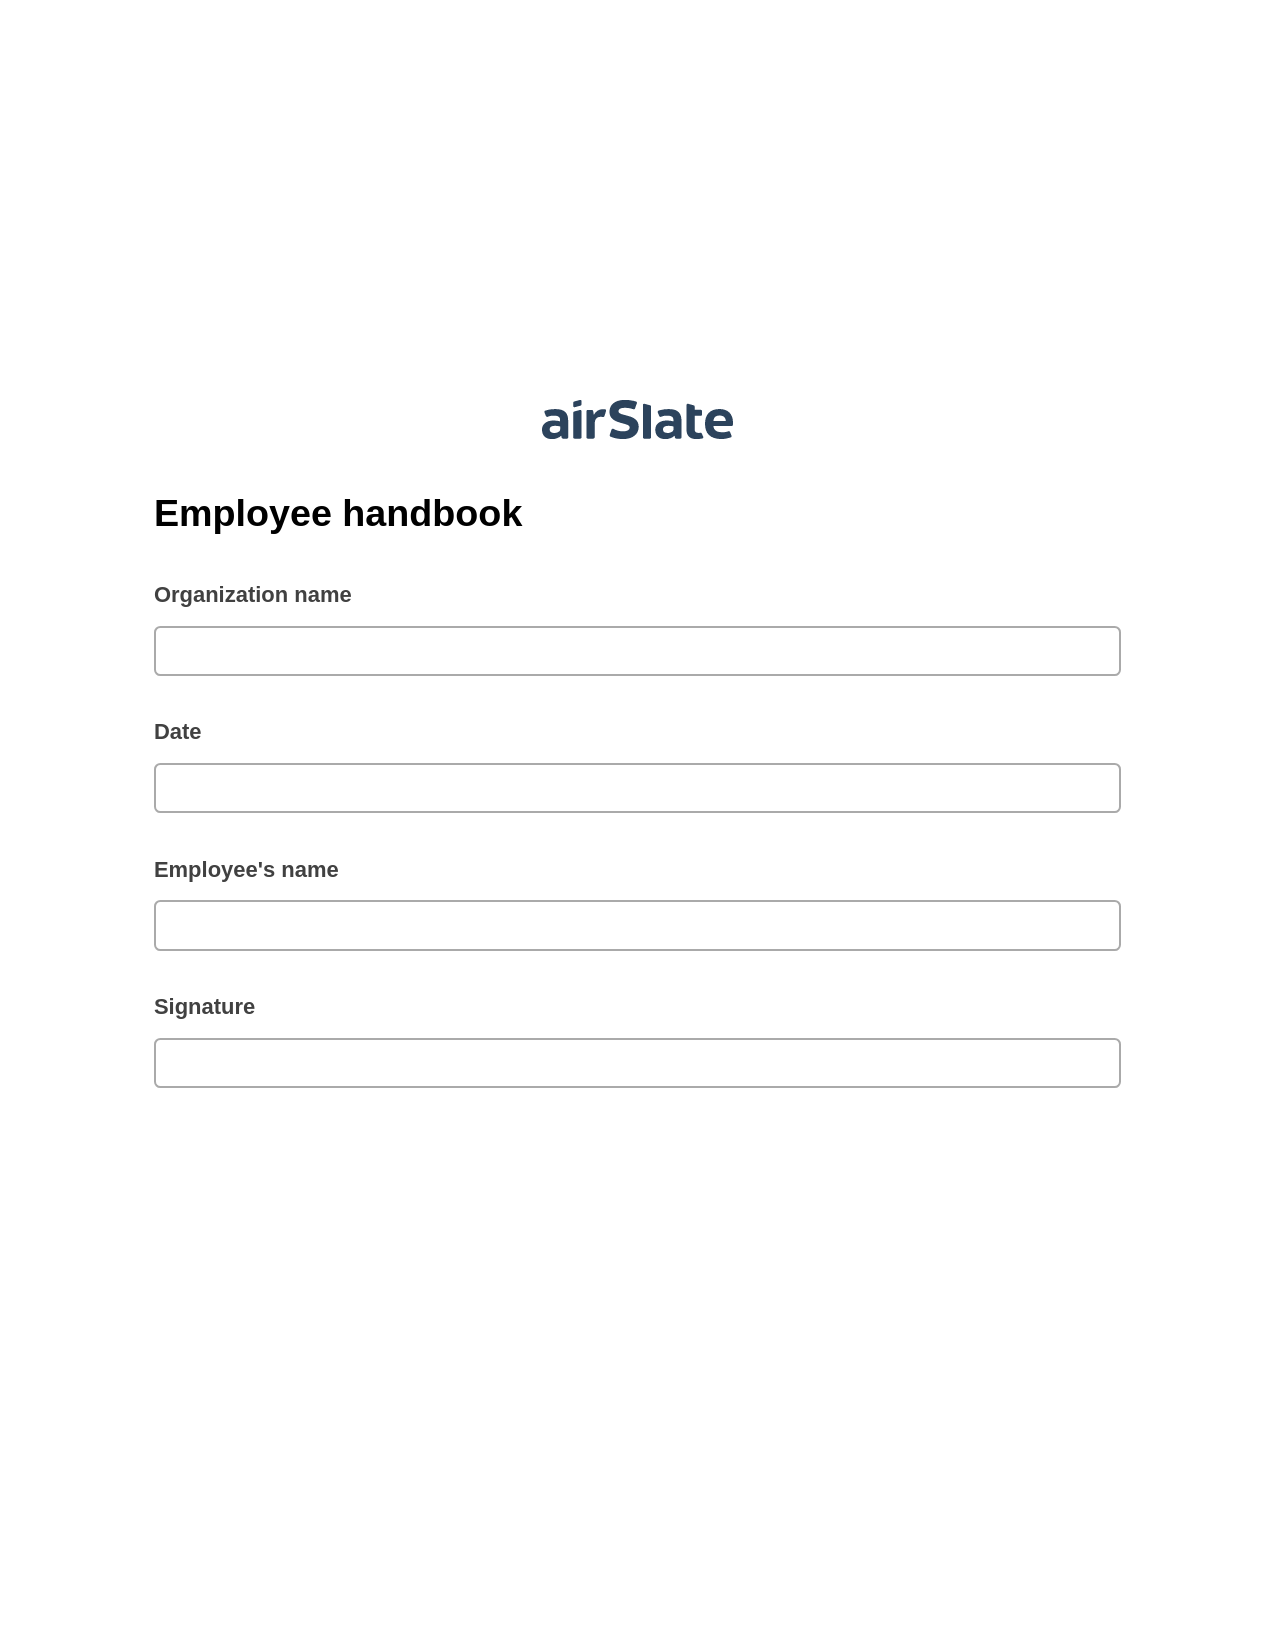 Multirole Employee handbook Pre-fill from Salesforce Record Bot, Invoke Salesforce Process Bot, Post-finish Document Bot